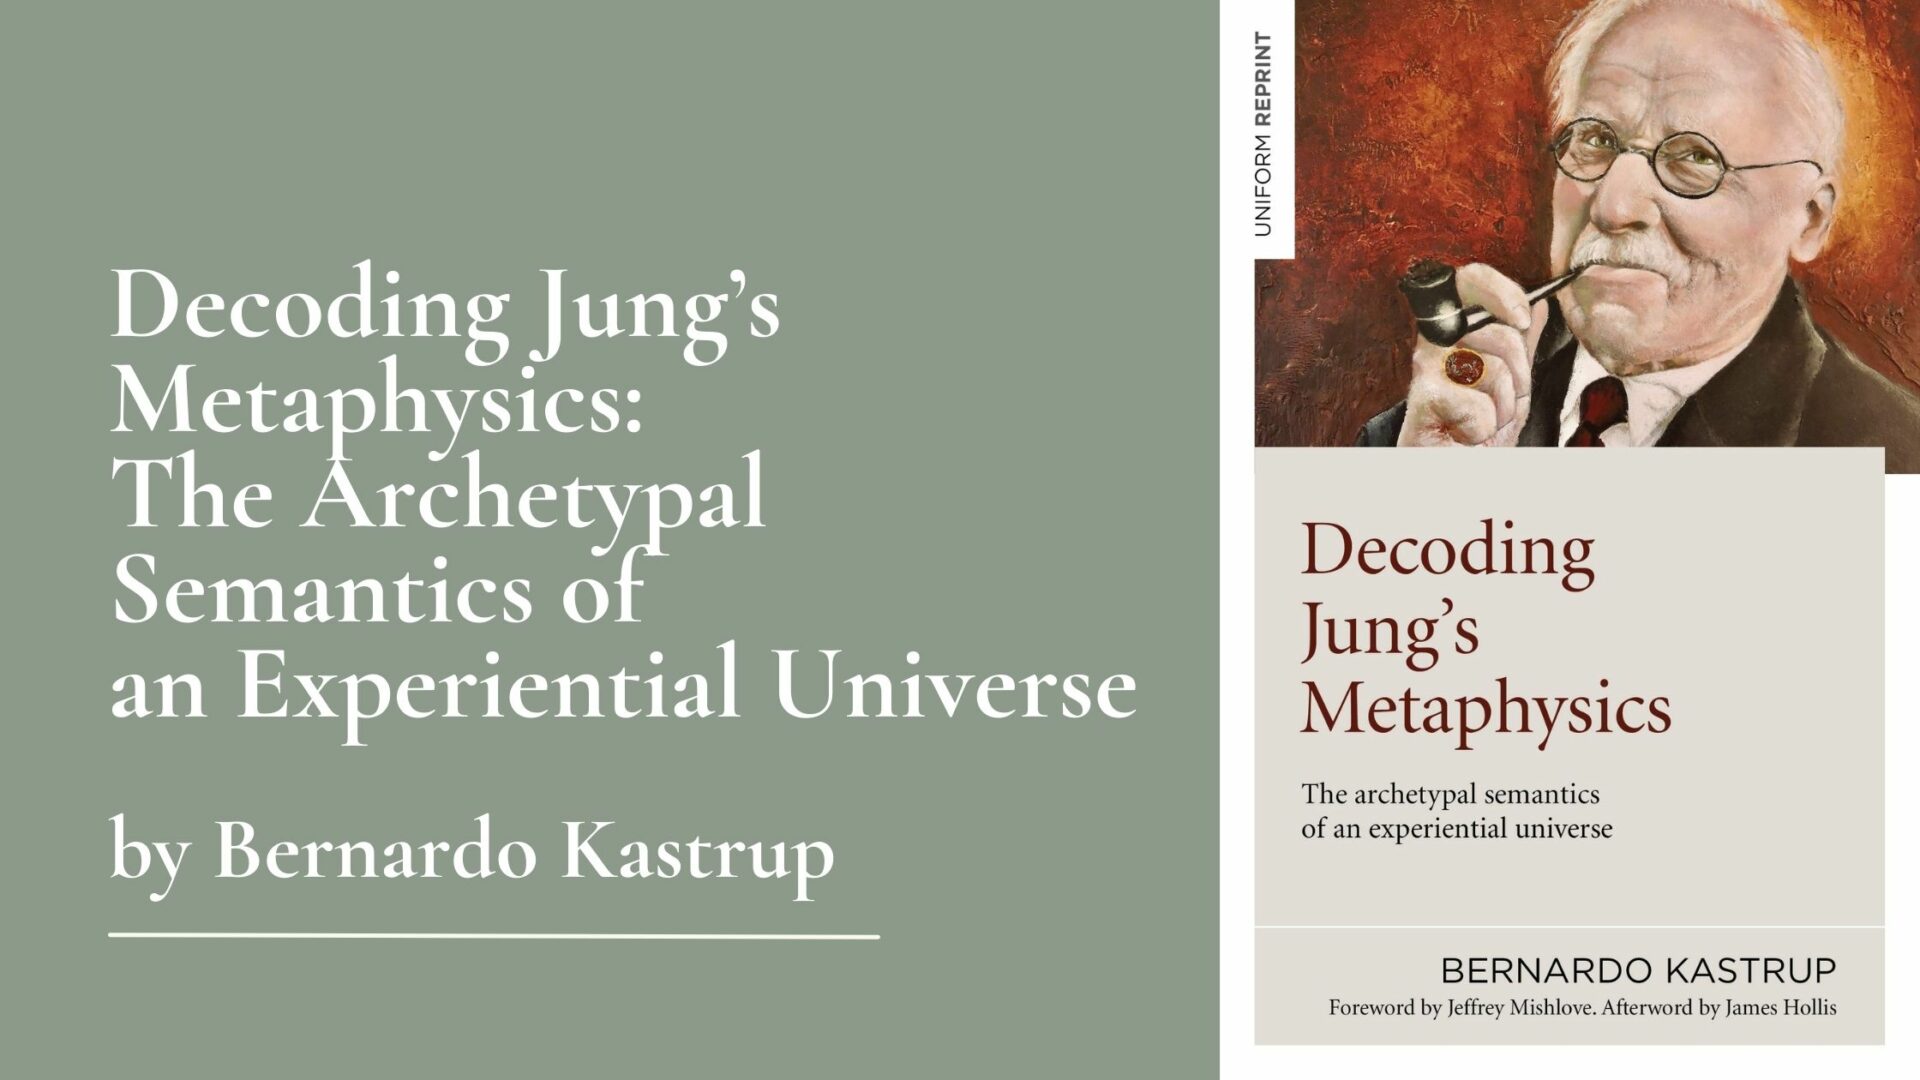 Decoding Jung’s Metaphysics: The Archetypal Semantics of an Experiential Universe by Bernardo Kastrup